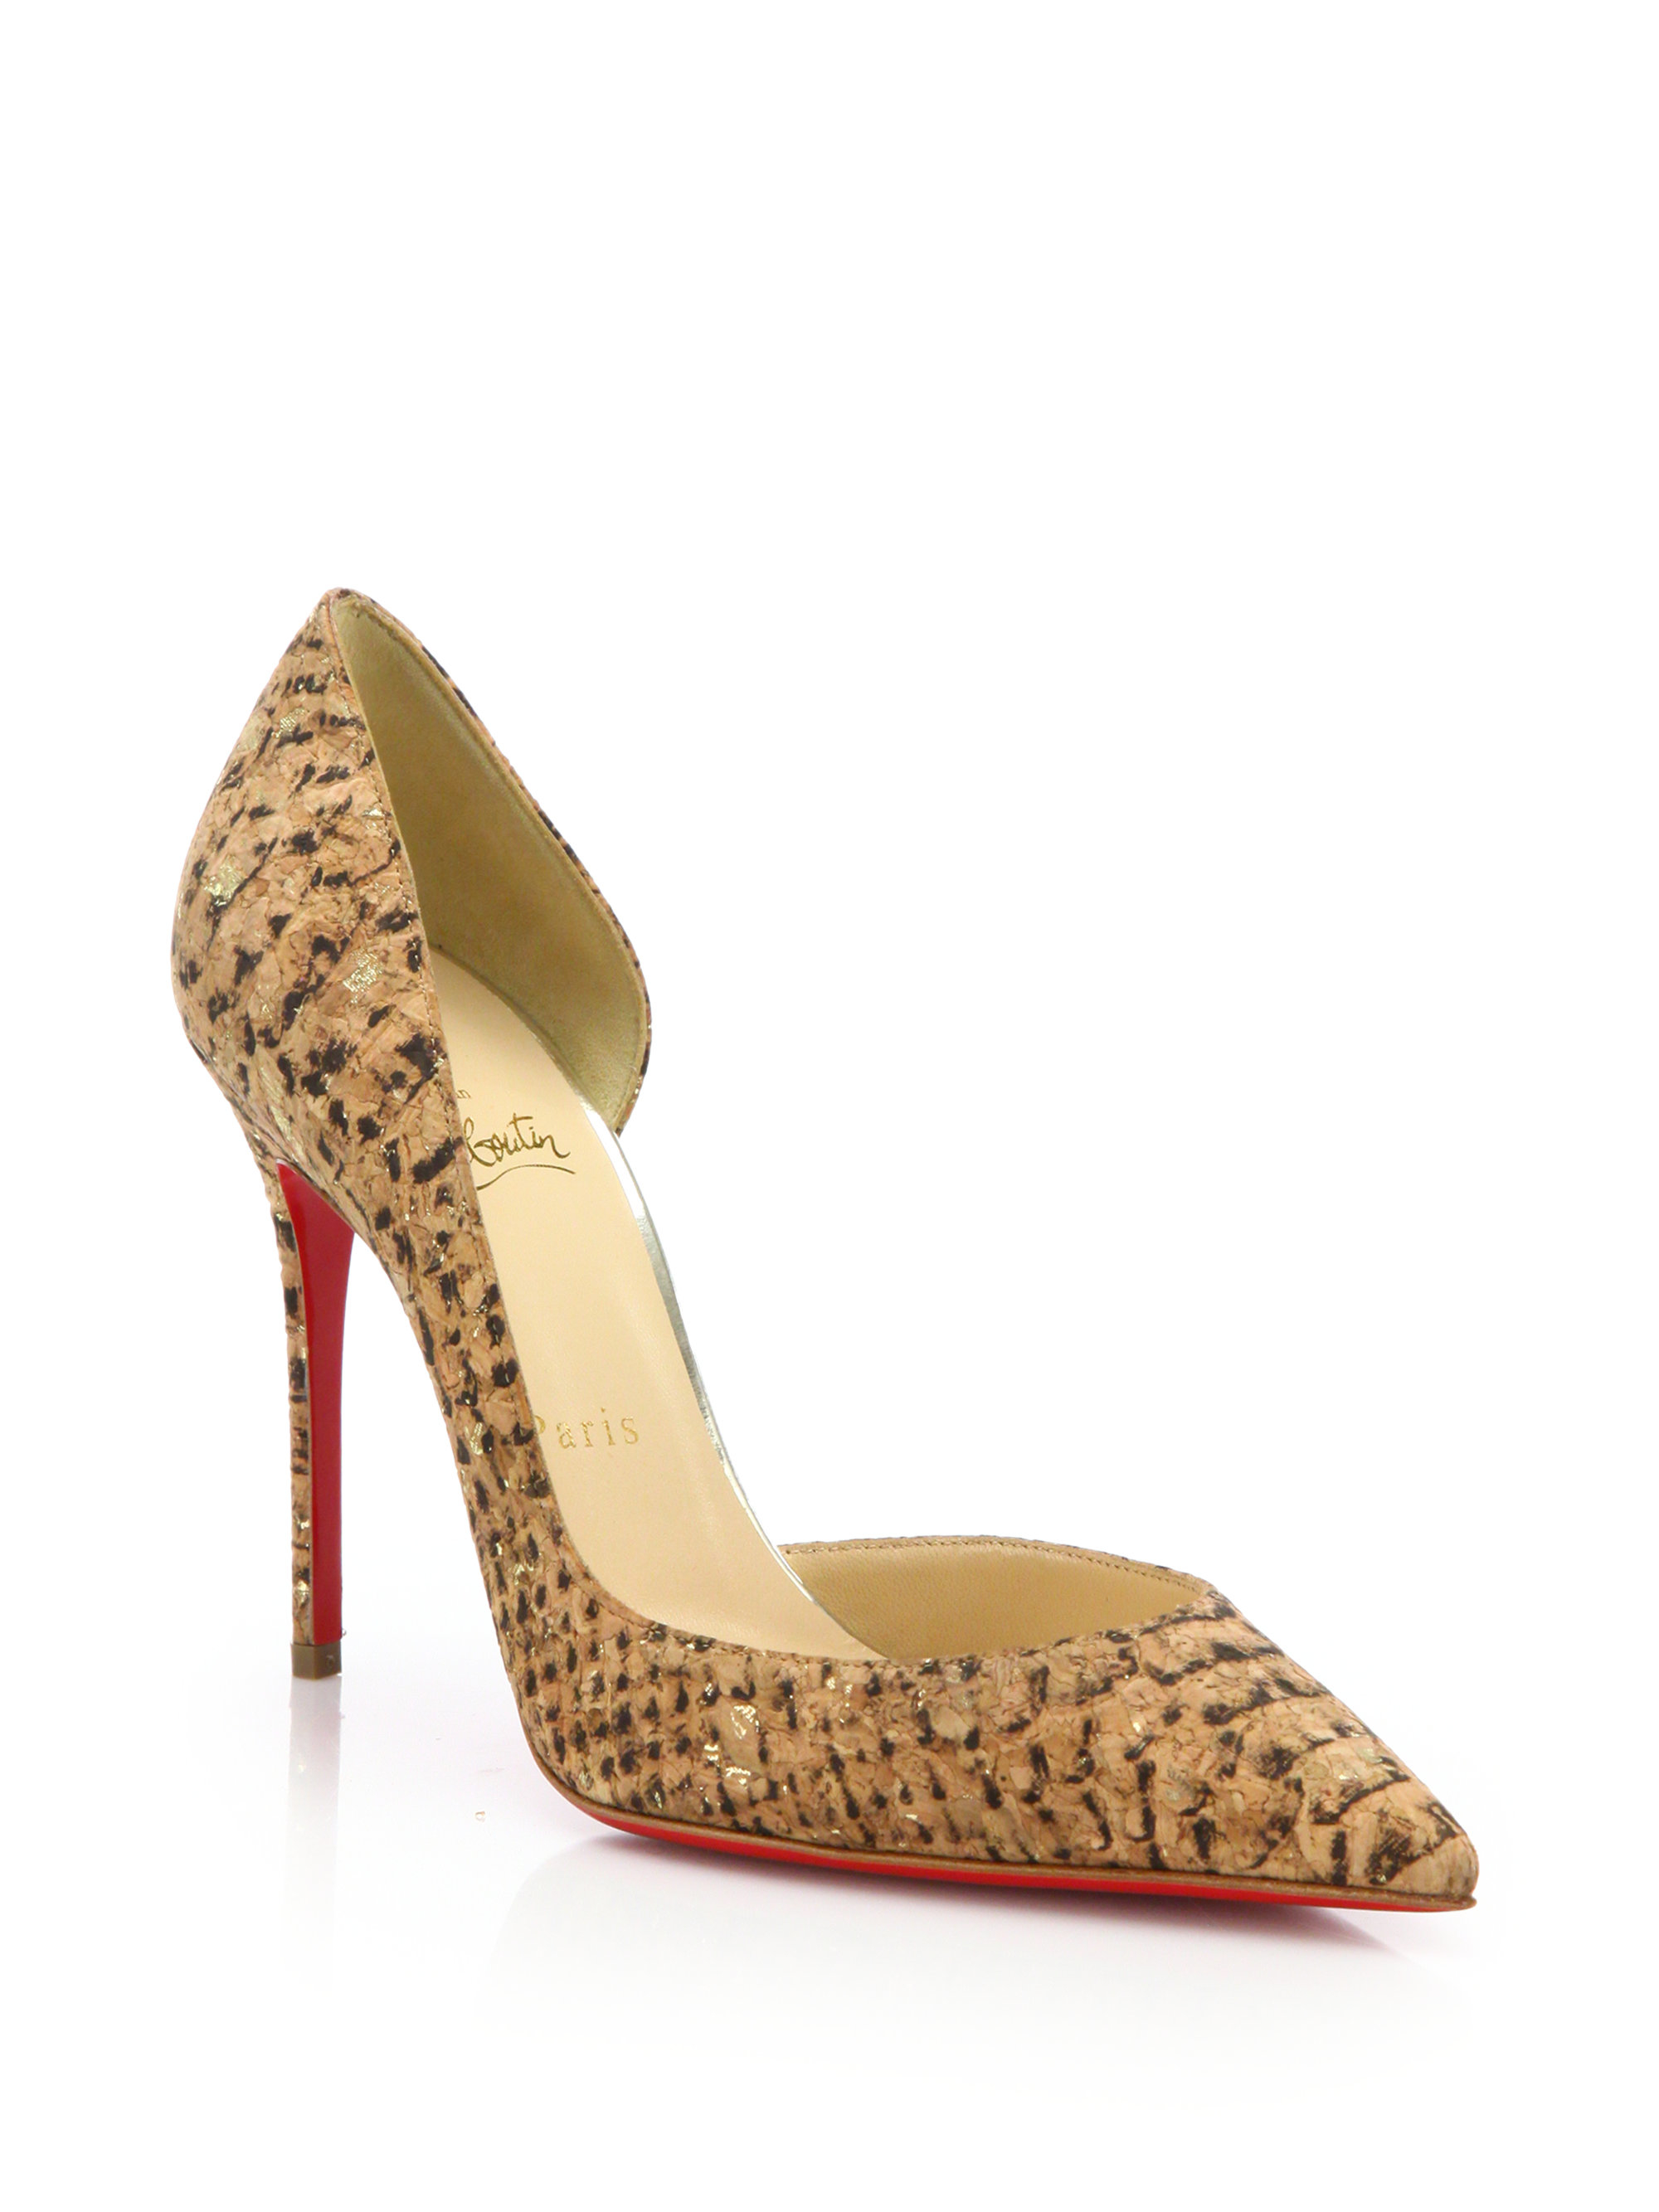 Louis Vuitton Shoes For Women Red Bottoms | SEMA Data Co-op